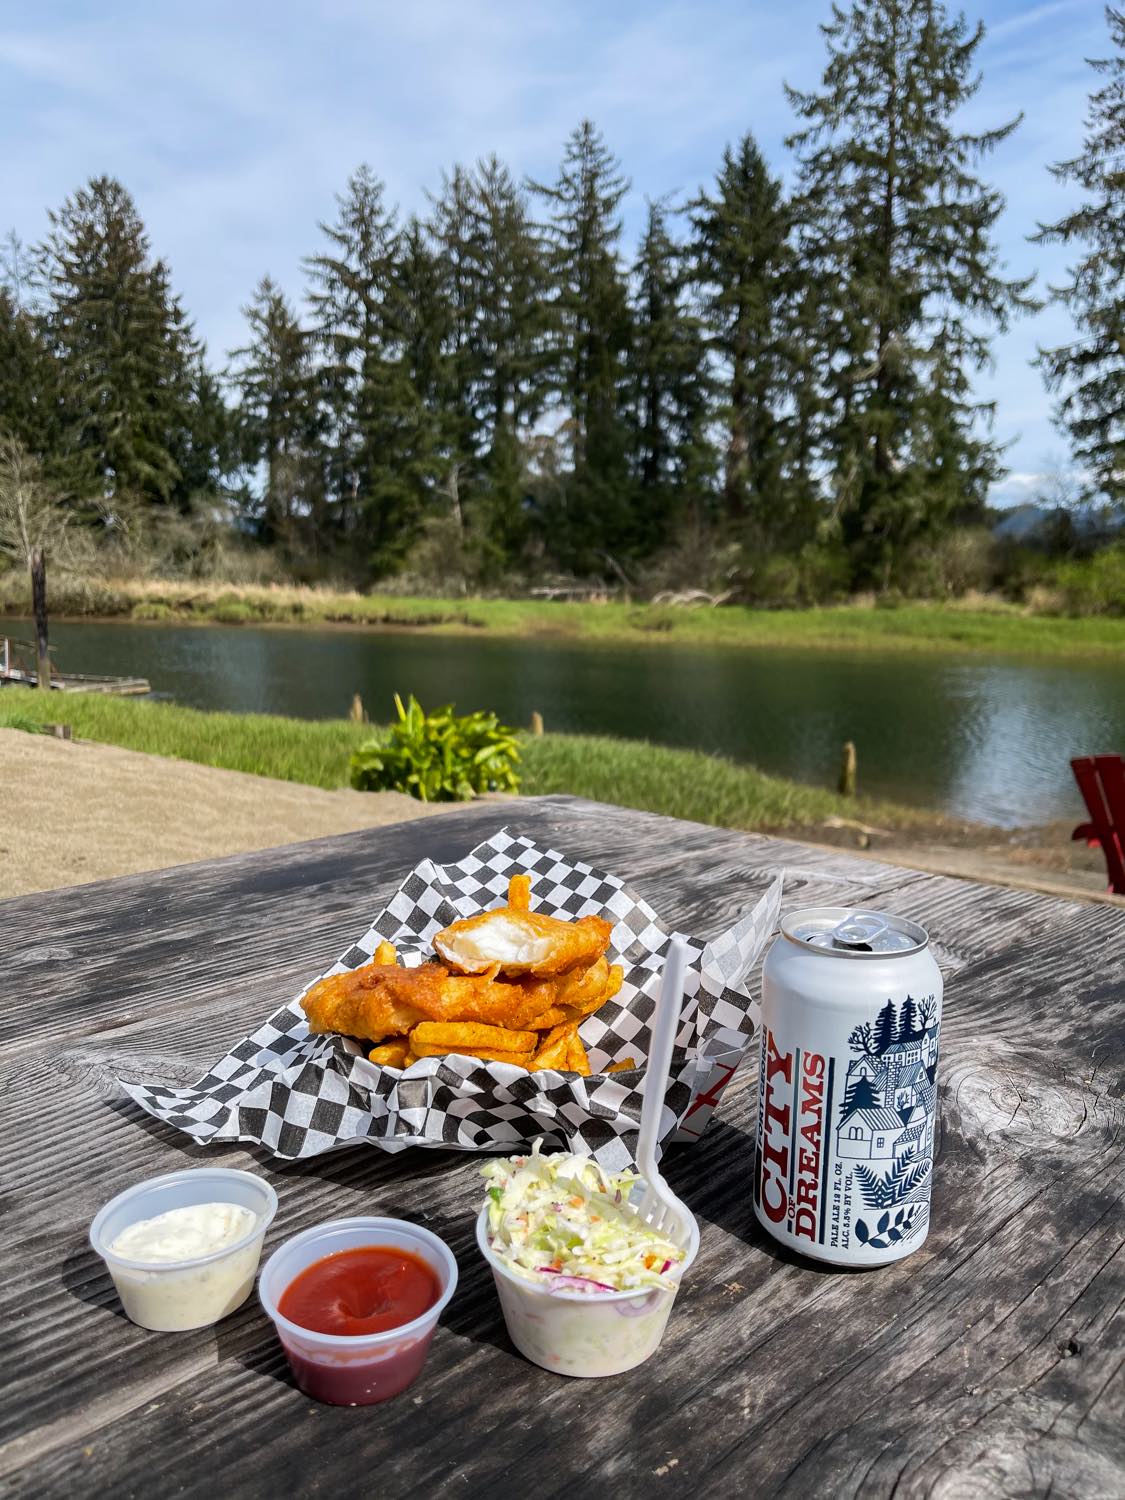 Simply Stellar! Riverside Fish & Chips Nehalem Oregon on the Oregon Coast This is Culinary Treasure